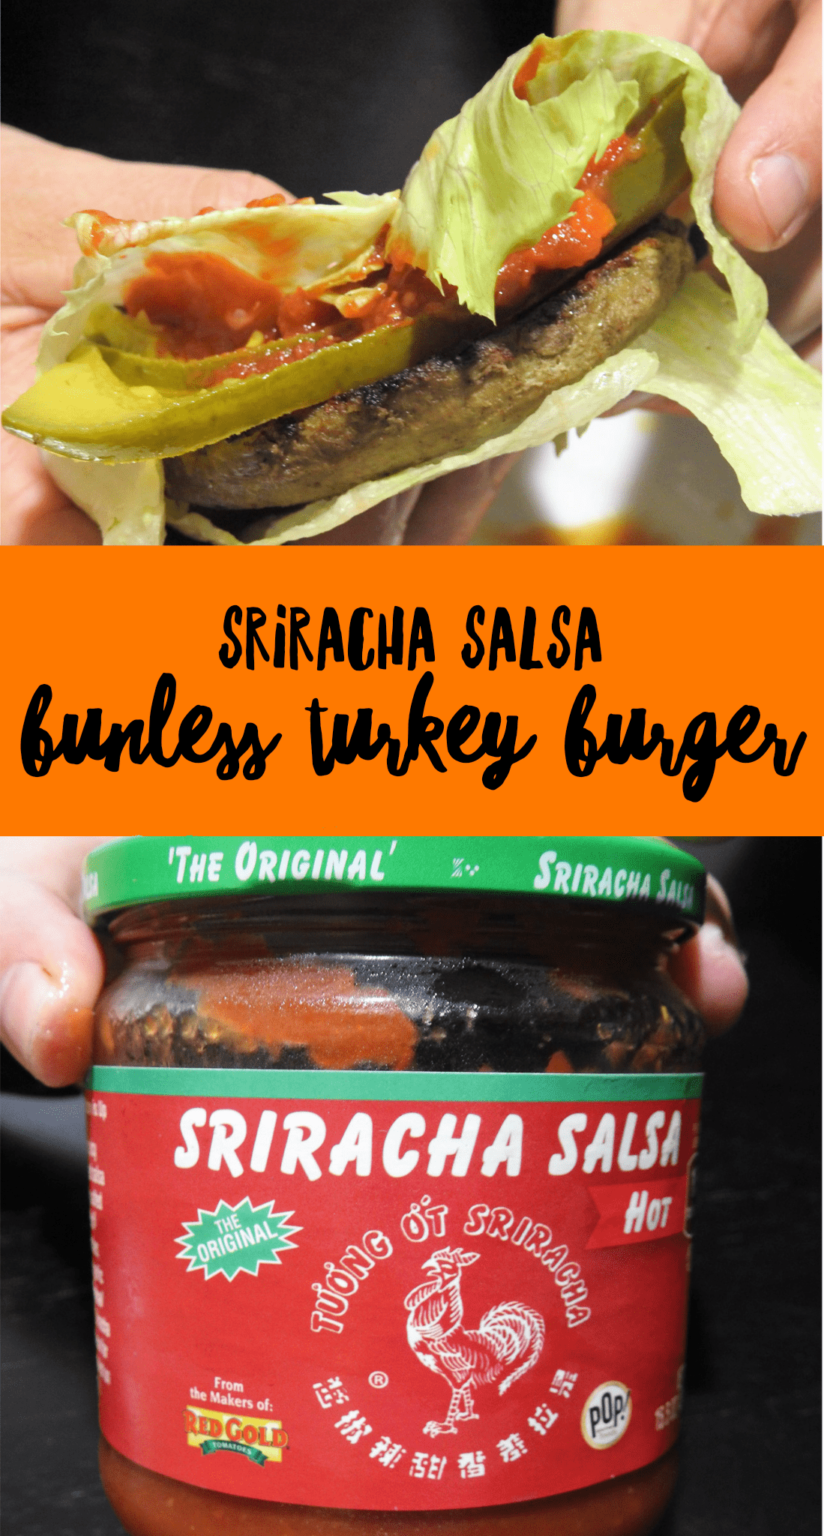 Sriracha Salsa Bunless Turkey Burger